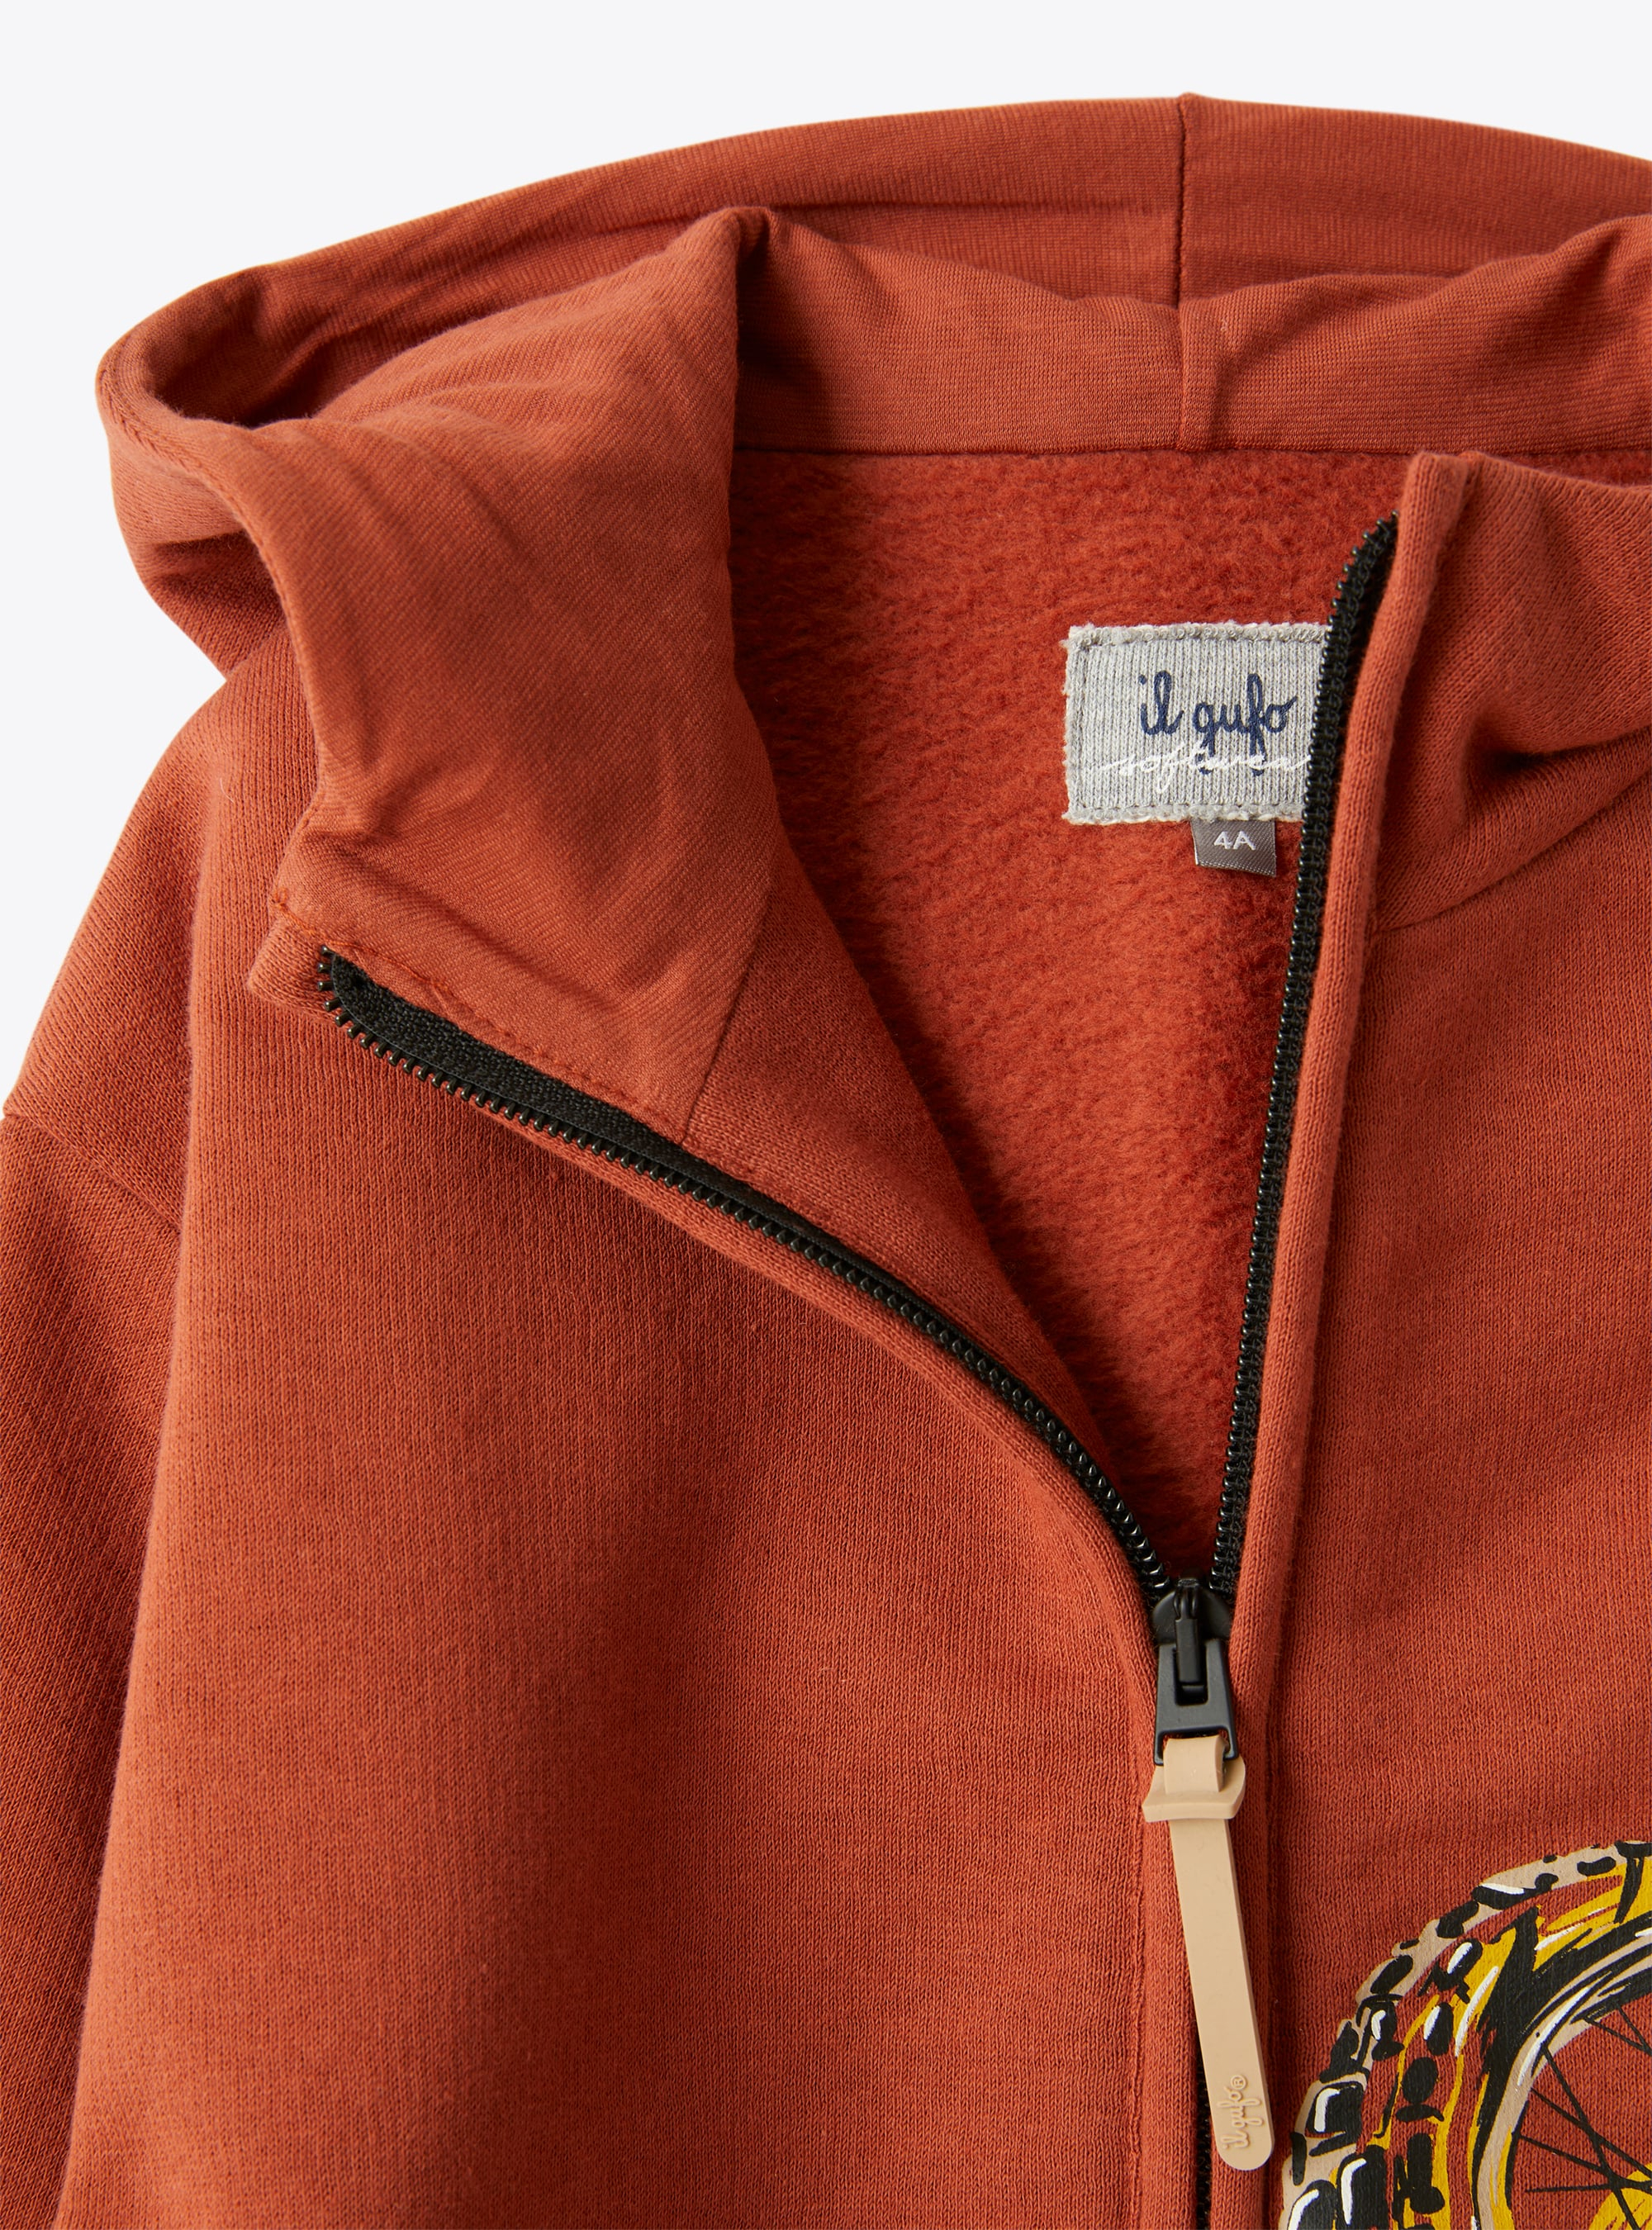 Hooded sweatshirt with biker print design - Orange | Il Gufo